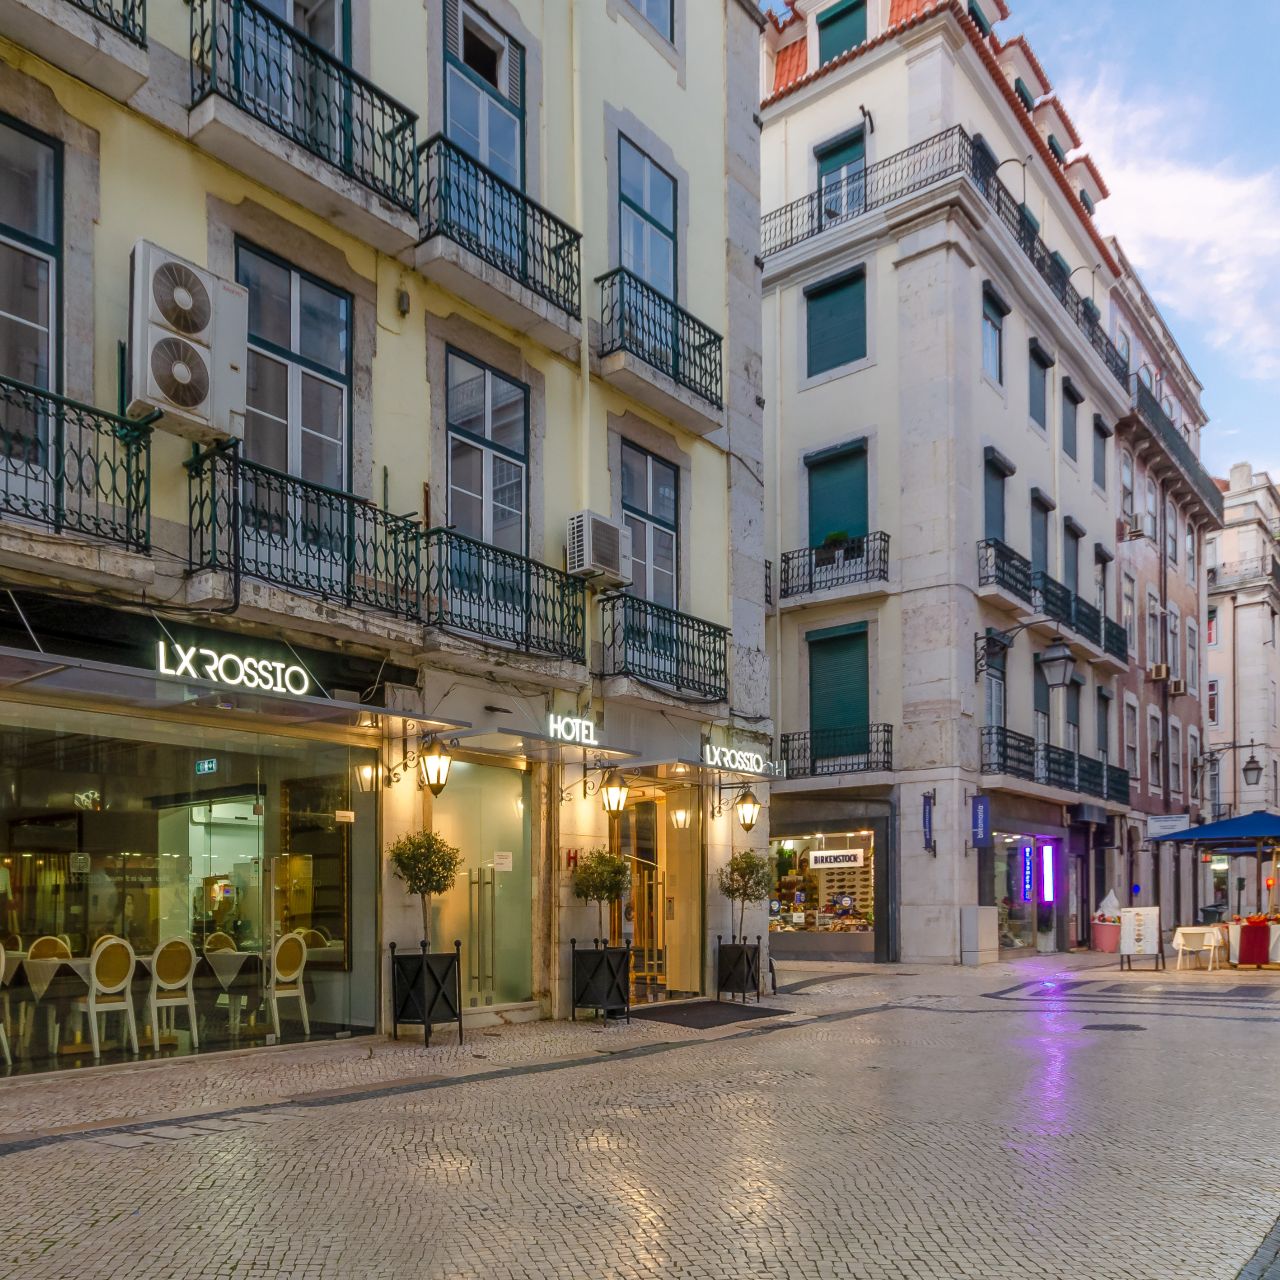 Hotel LX Rossio - Lisbona - HOTEL INFO